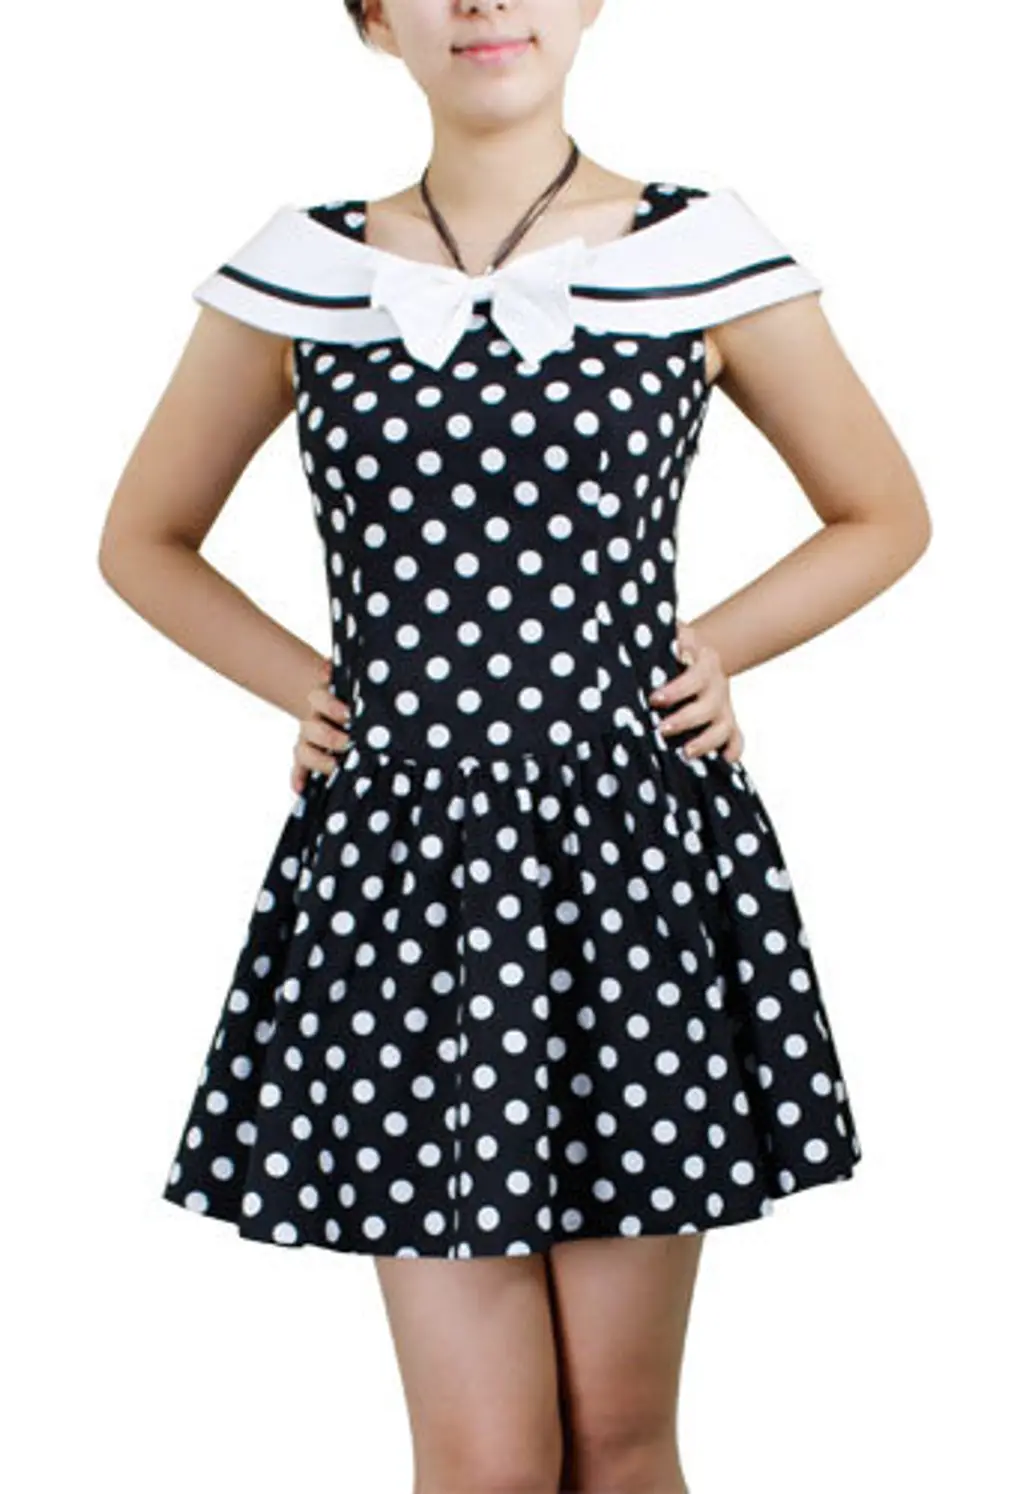 Sailor Inspired Vintage Polka-Dot Mini Dress